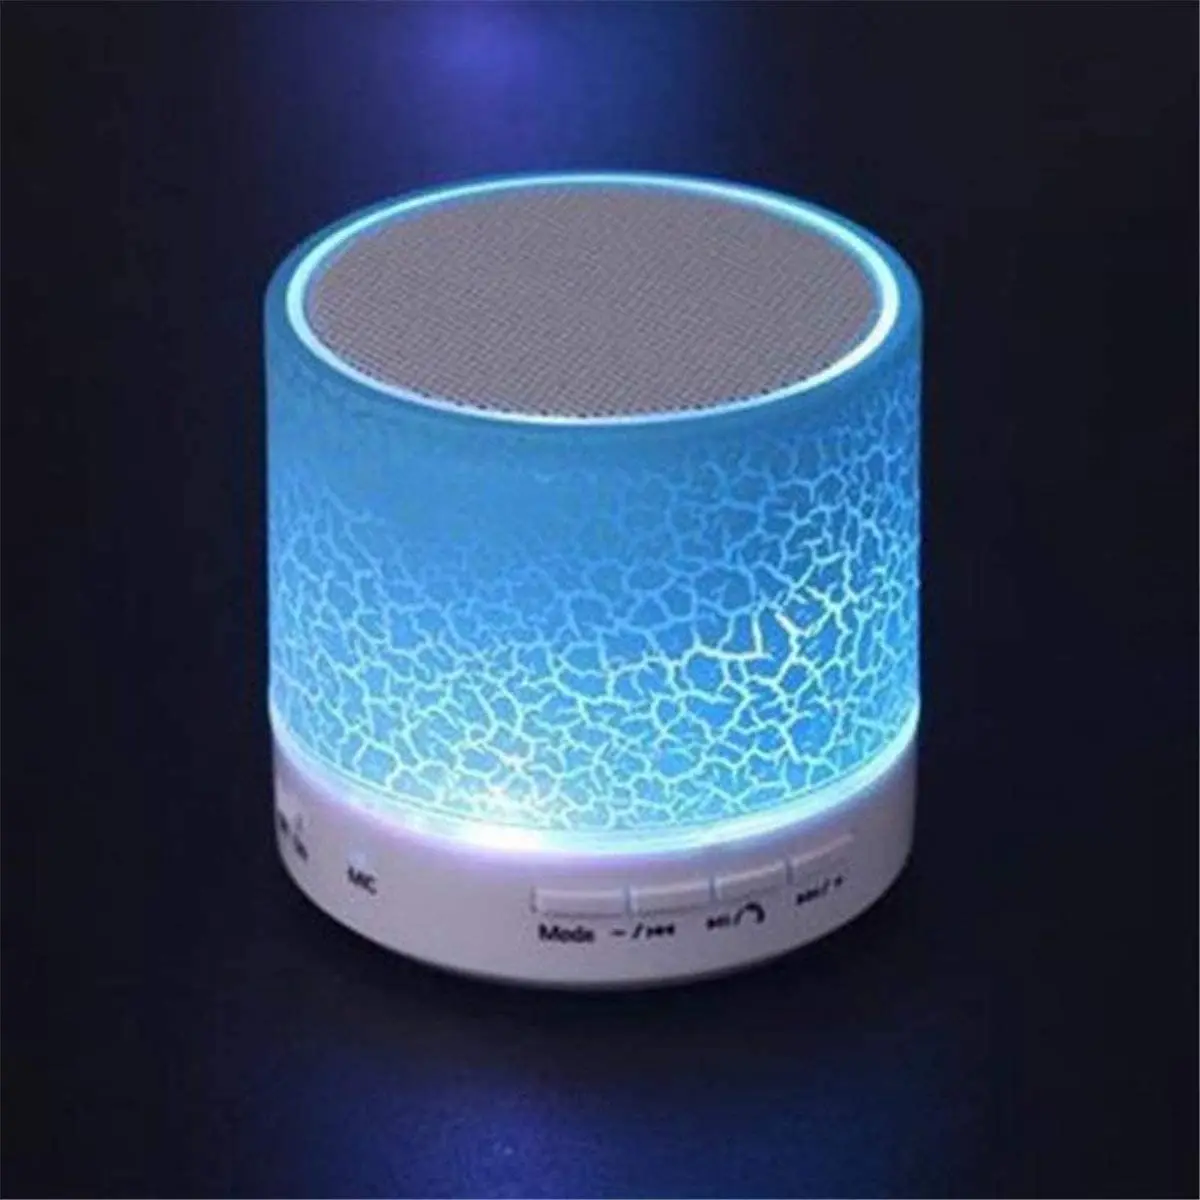 Elari NanoBeat - Mini Altavoz Bluetooth Potente Inalámbrico, con Micrófono,  Carcasa Metálica Robusta, Luz LED, 5 Horas de Reproducción, Se Pueden Unir